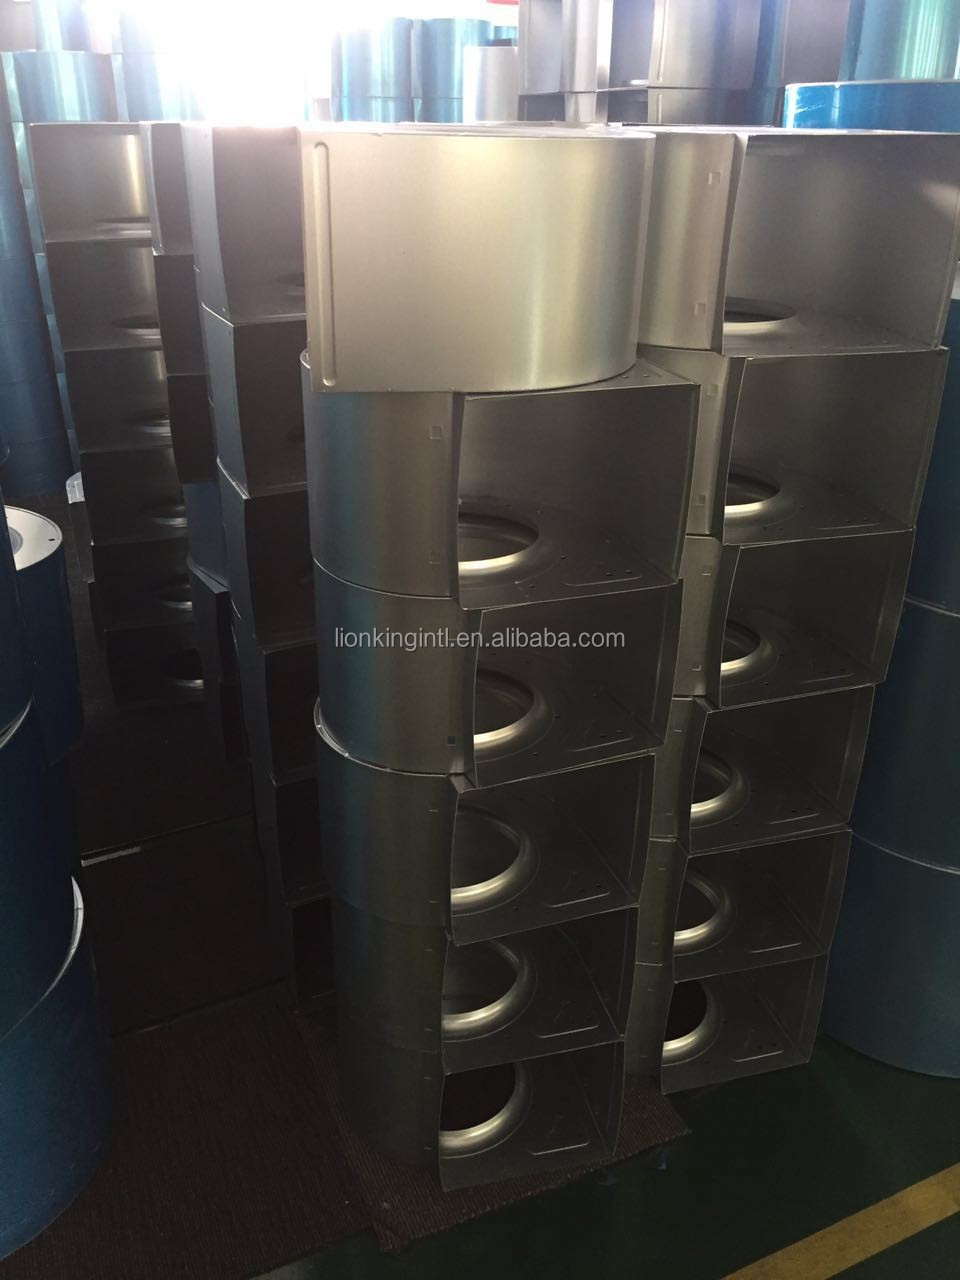 Ventilateurs centrifuges pour AHU, FFU, MAU, système HVAC